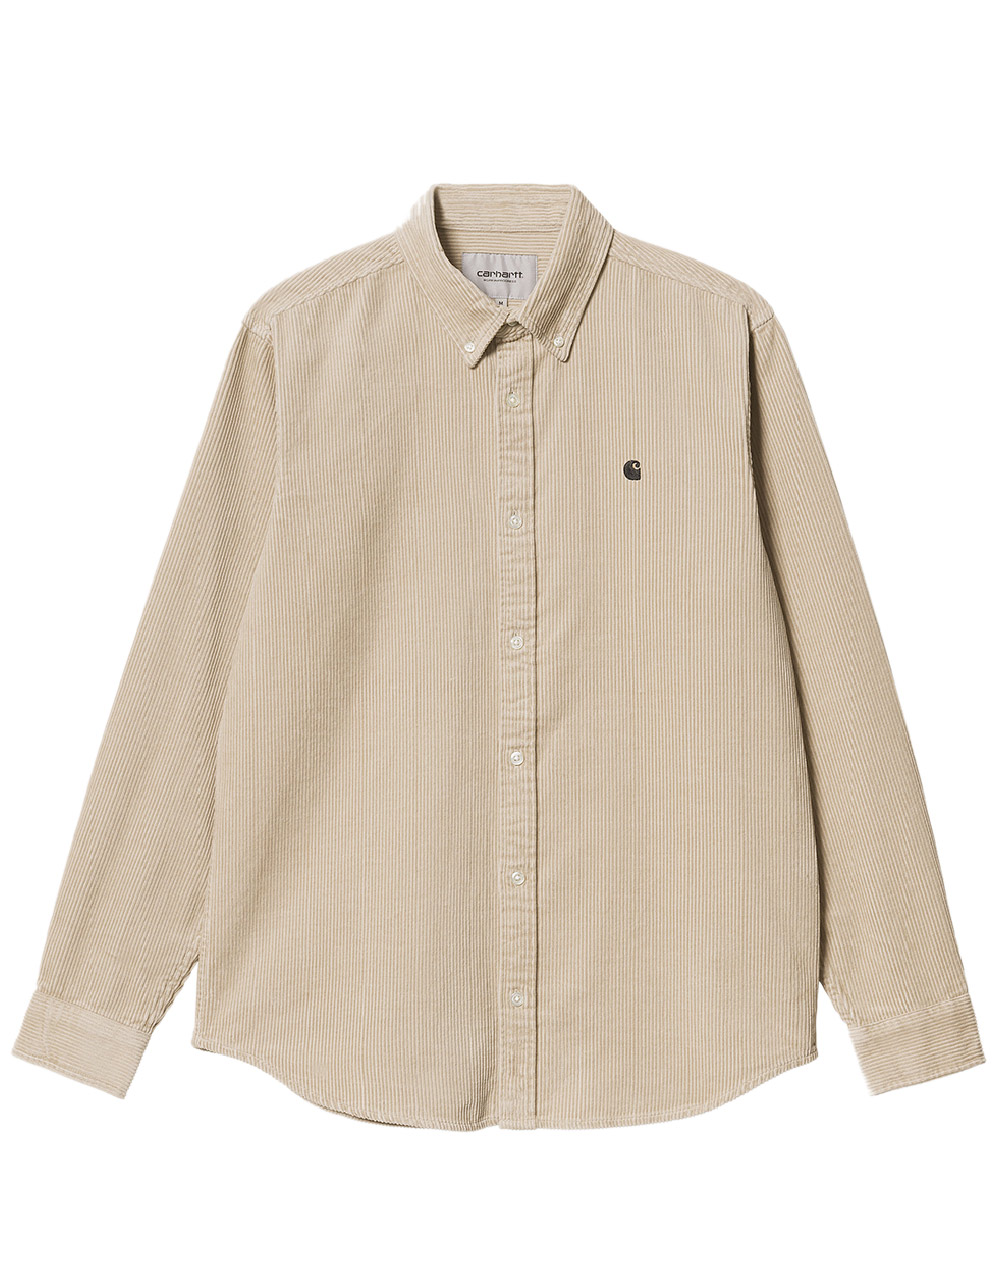 Carhartt WIP – L/S Madison Cord Shirt